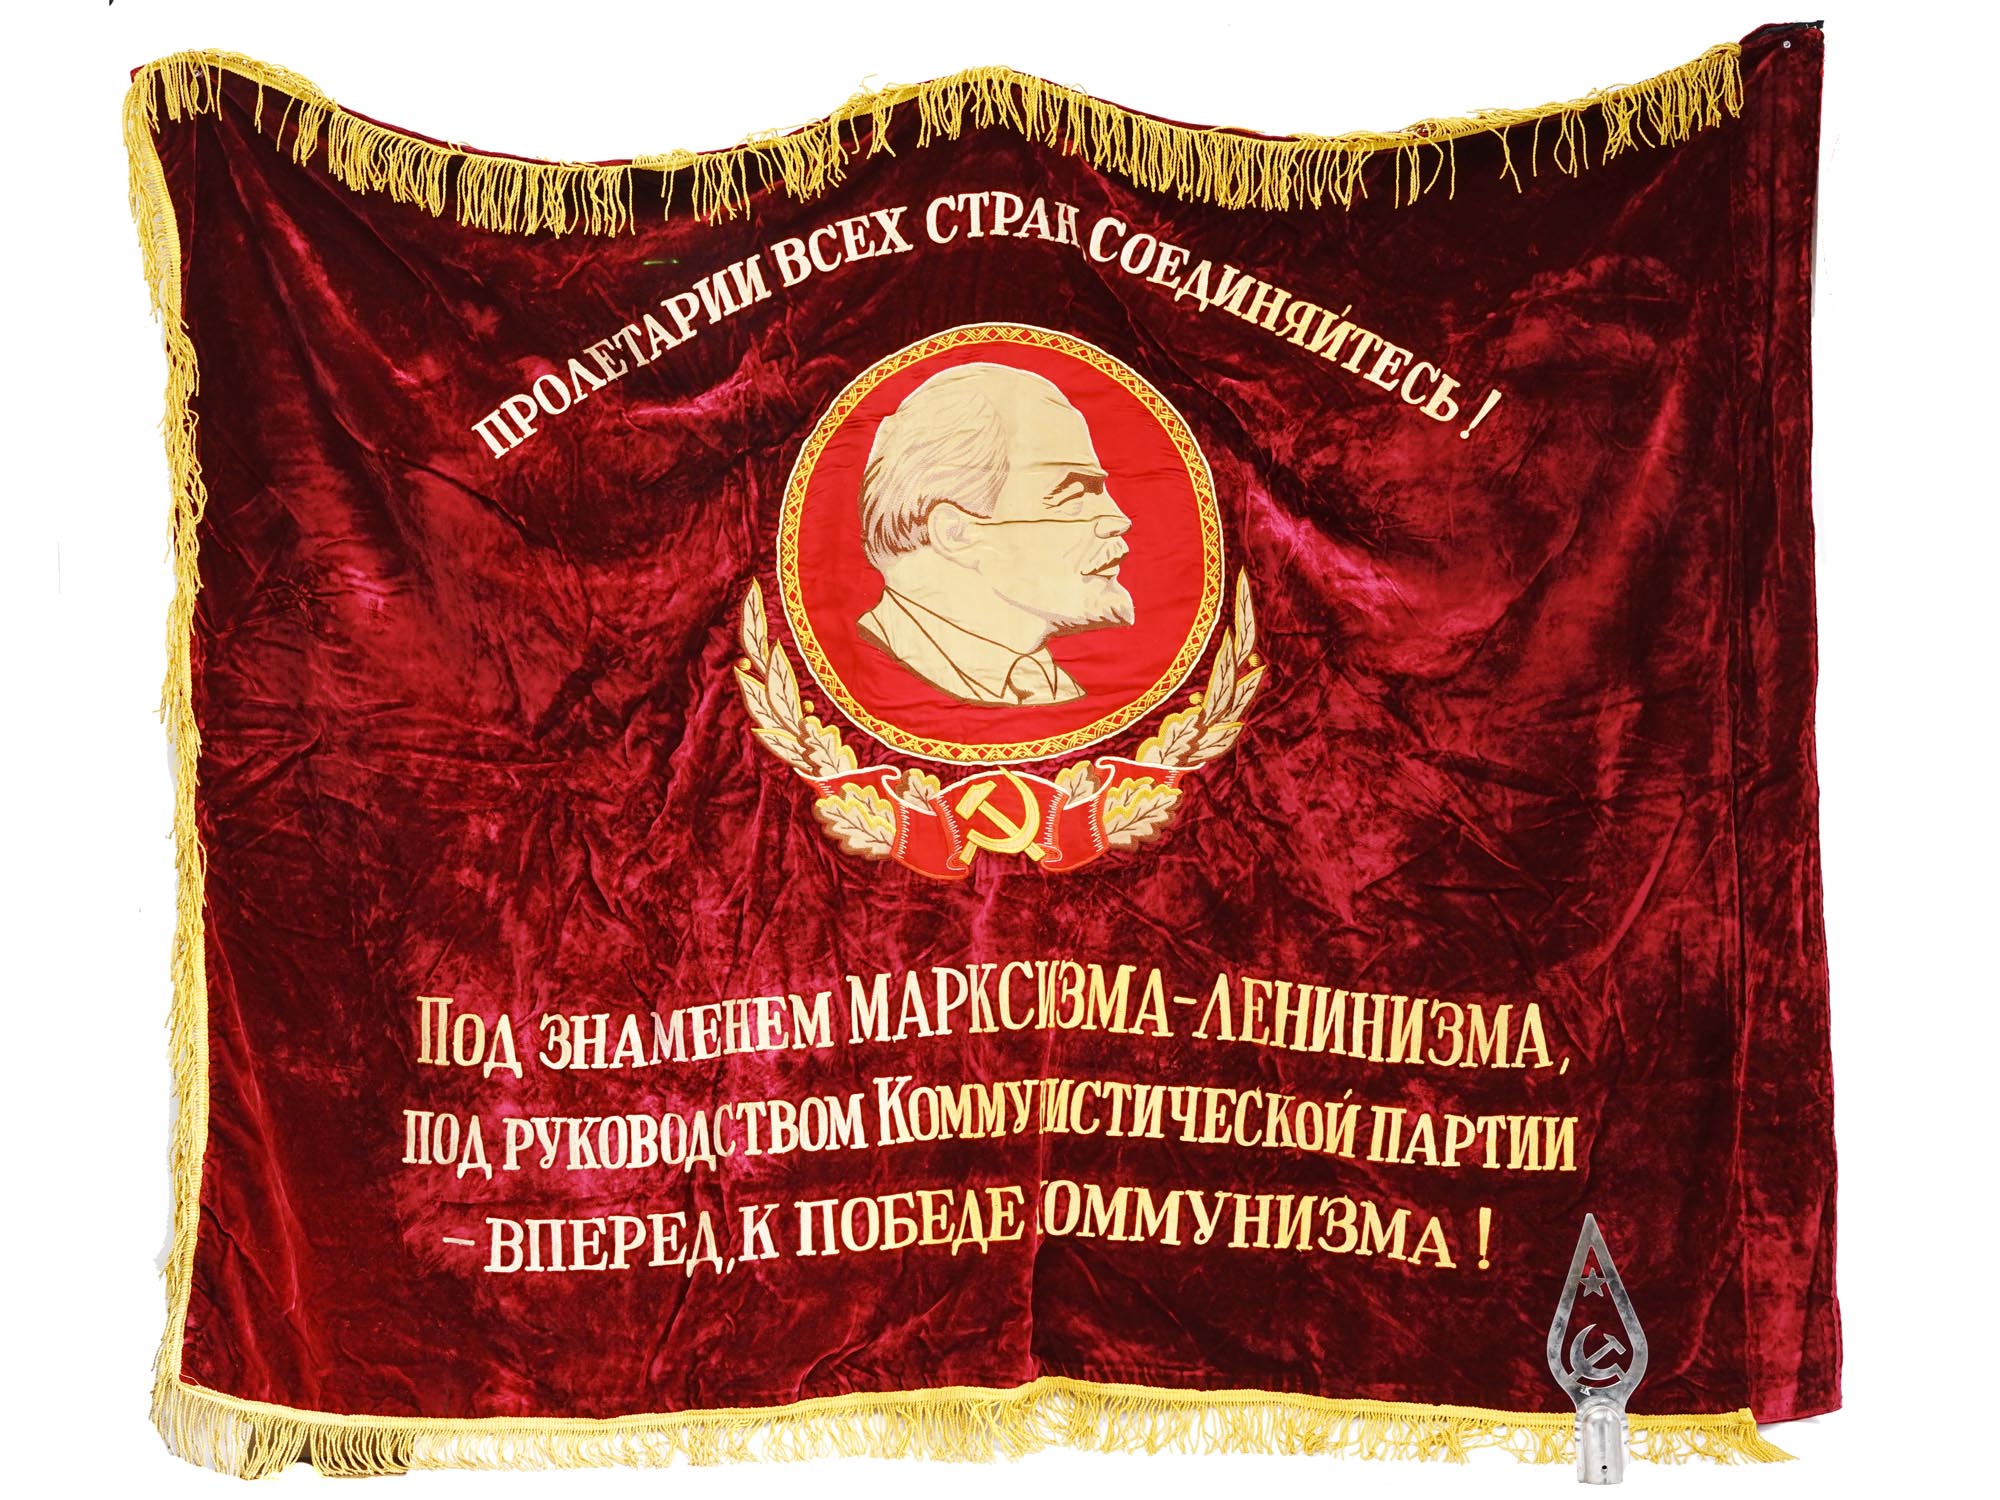 SOVIET EMBROIDERED BANNER AND STEEL FLAG POMMEL PIC-0